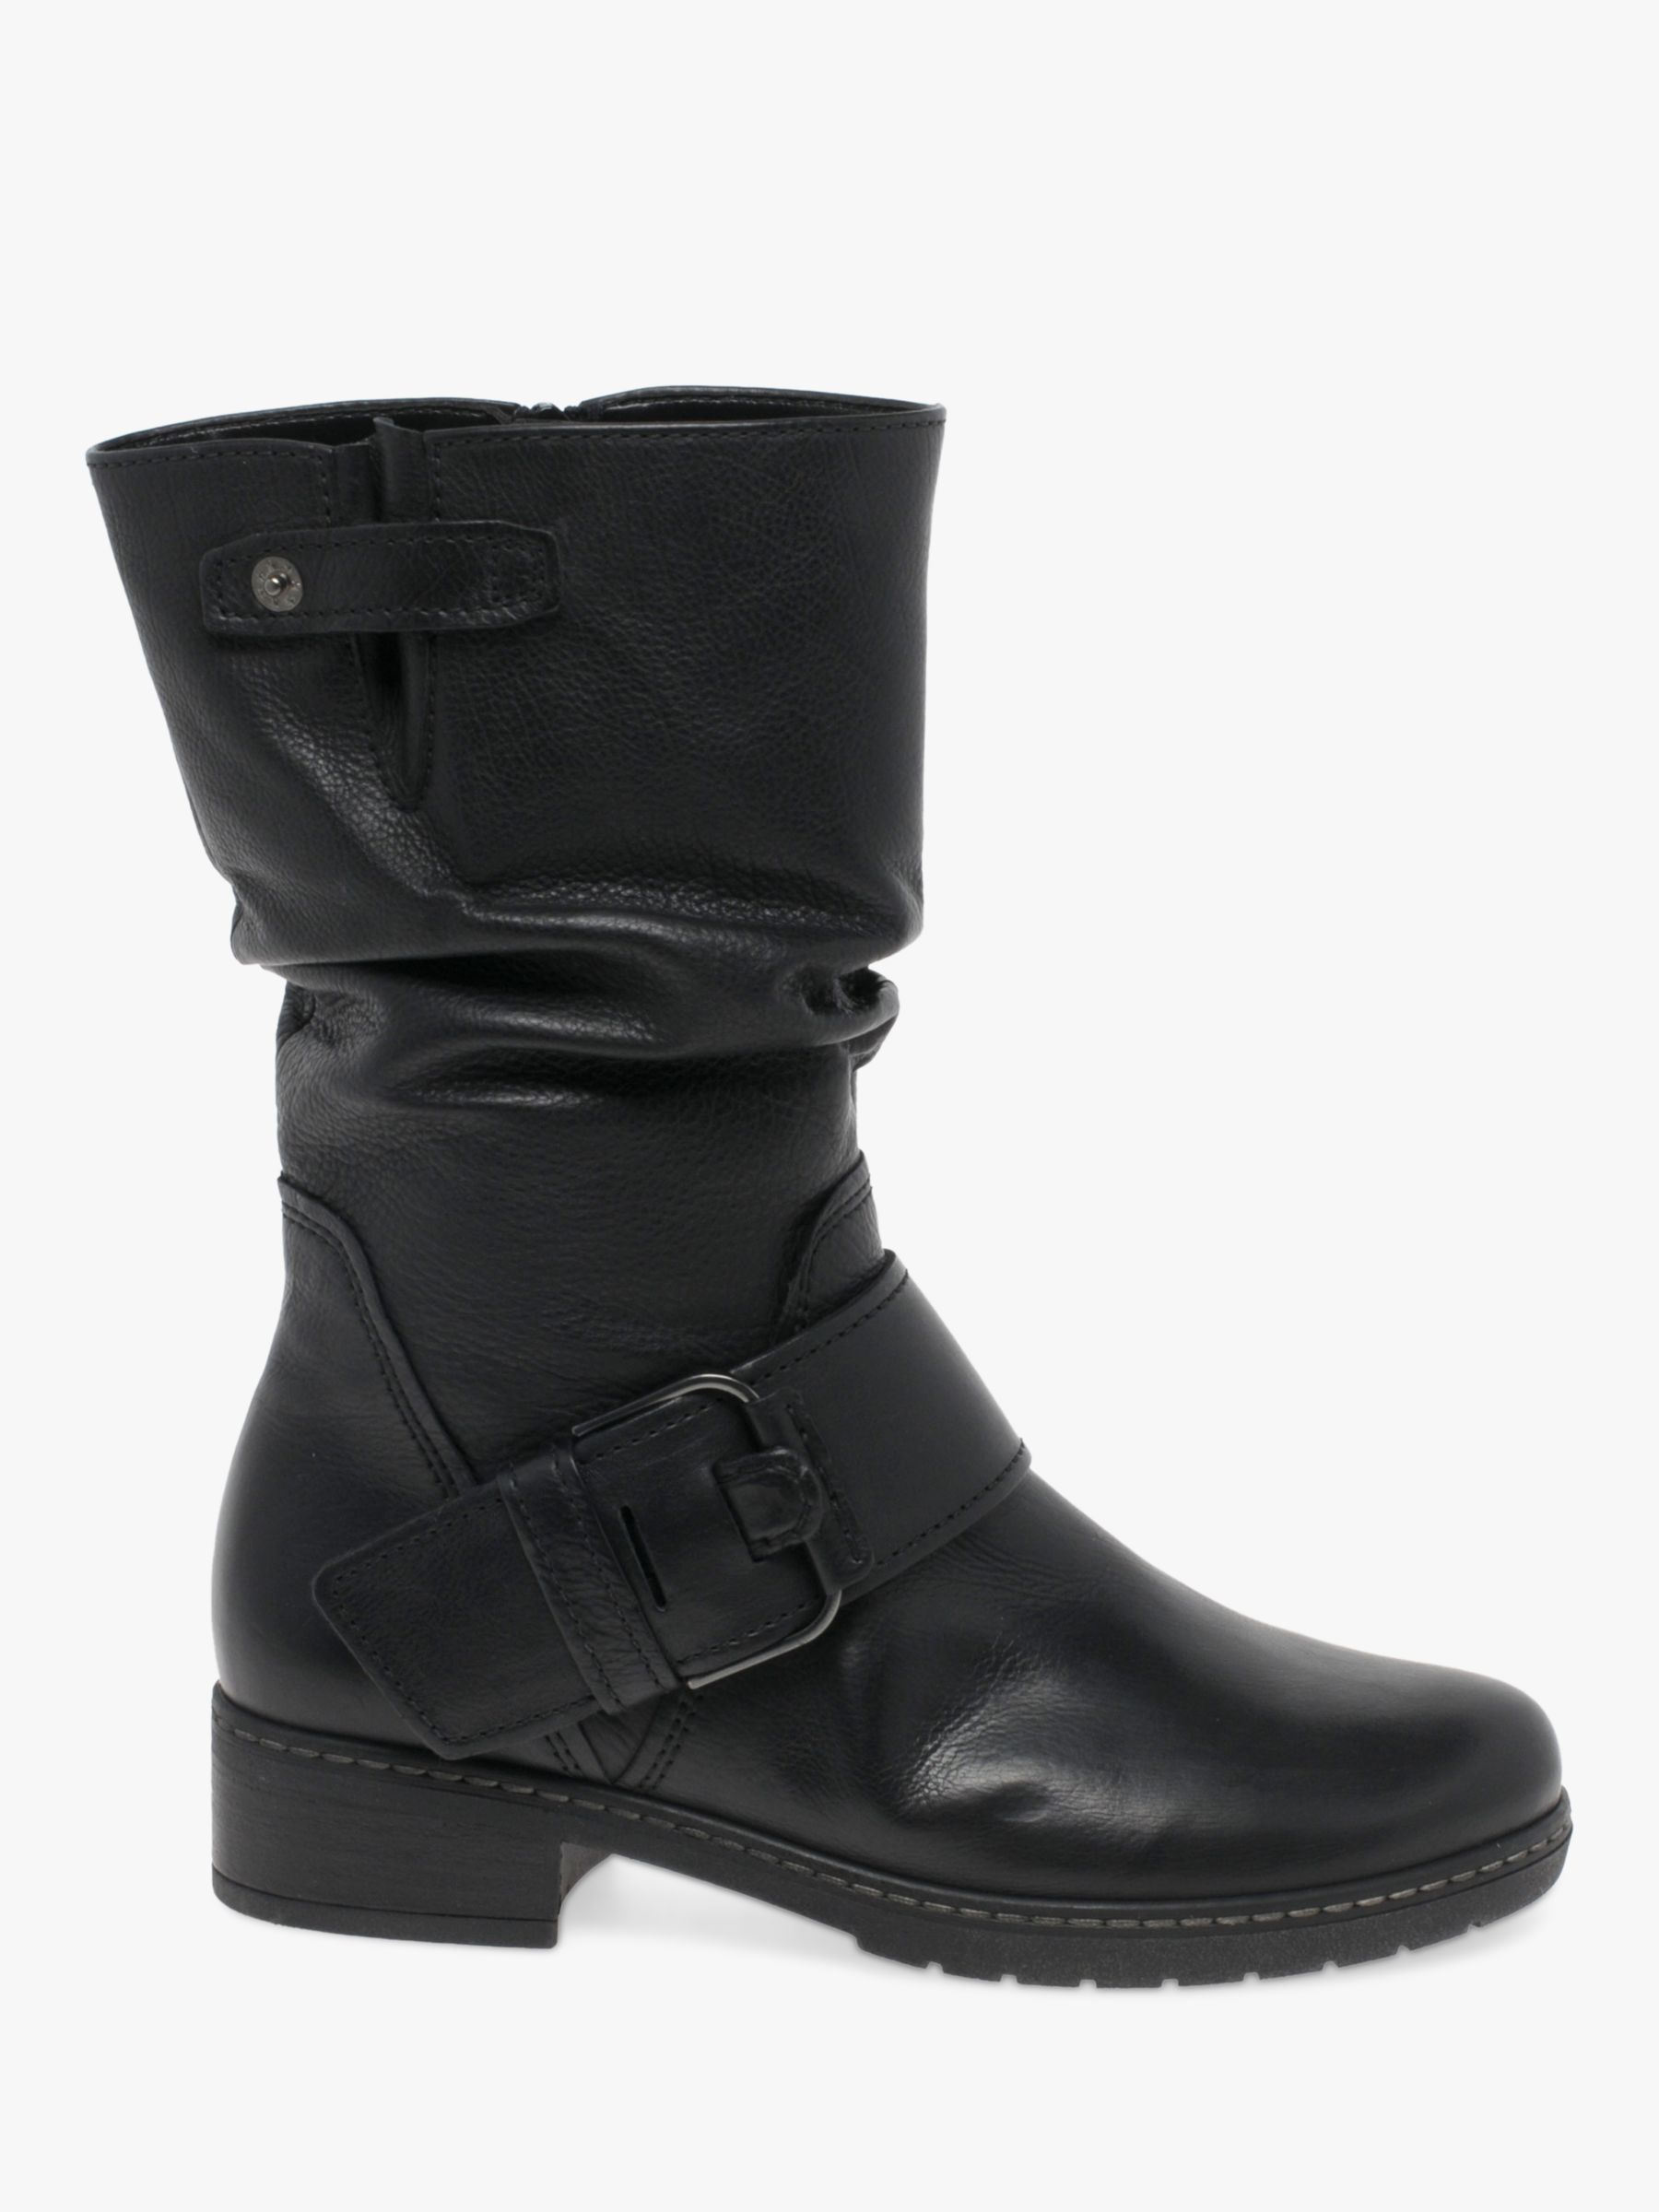 gabor calf length boots